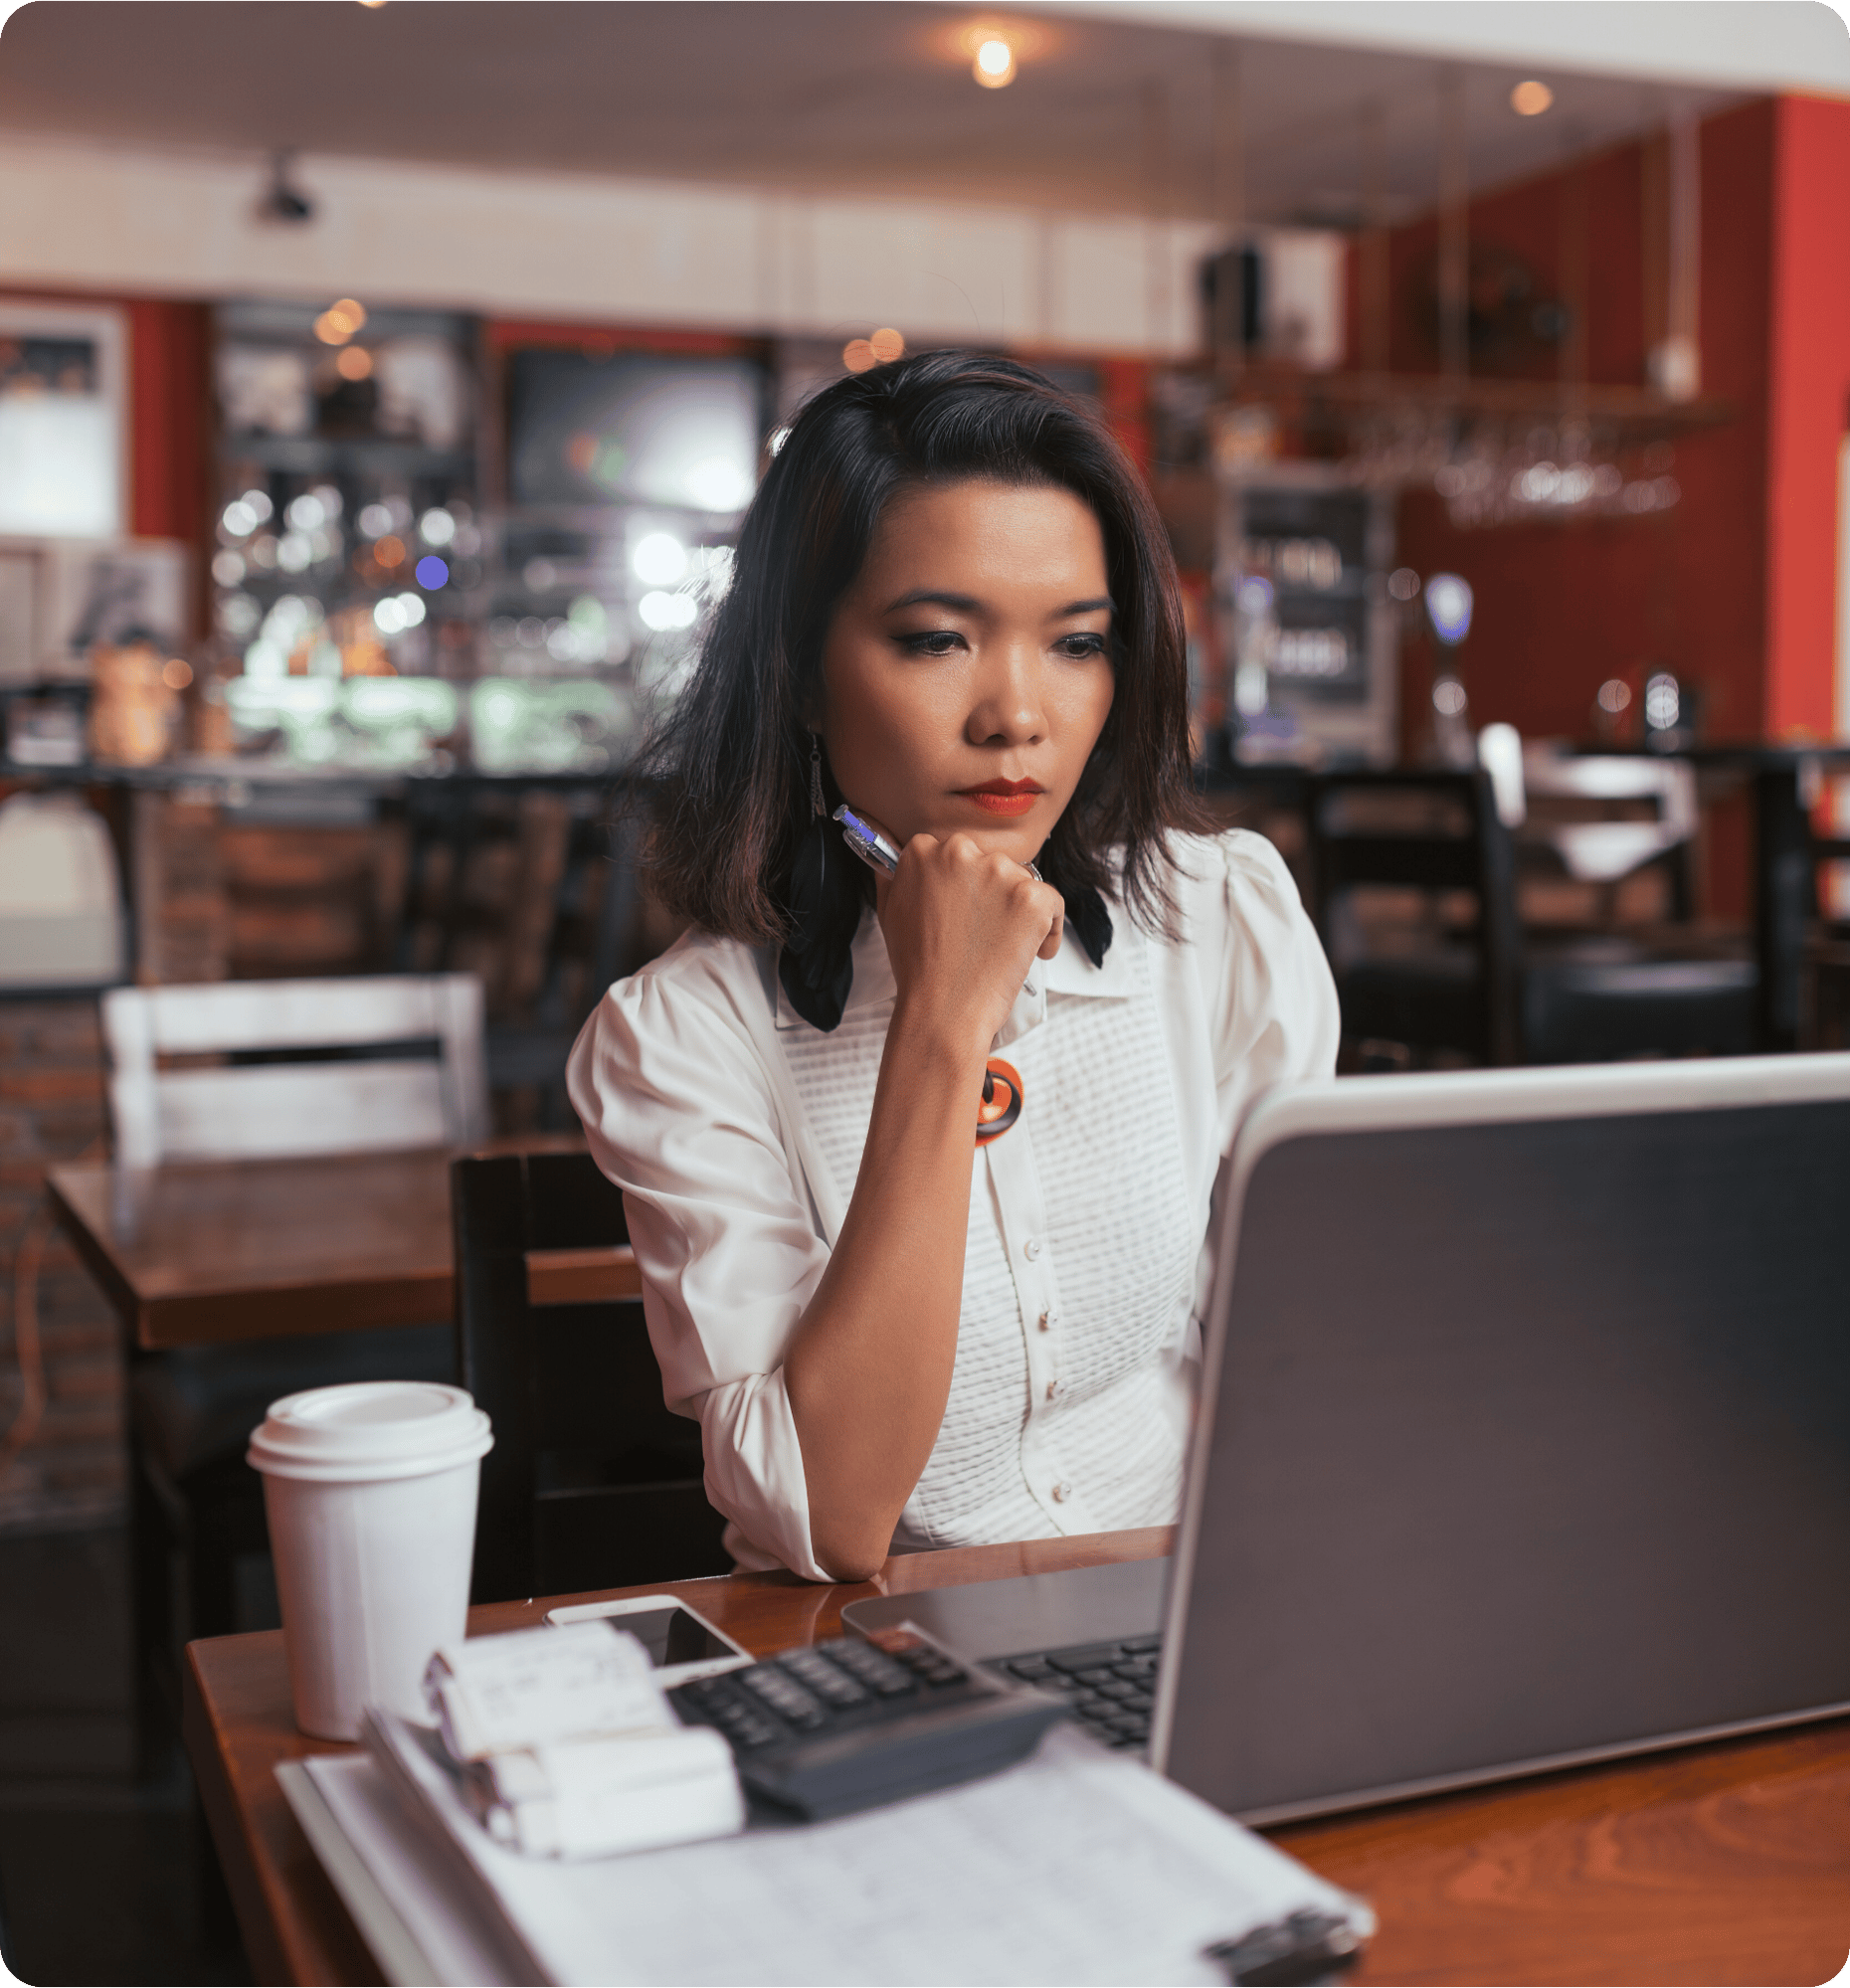 Restaurant Woman at Computer